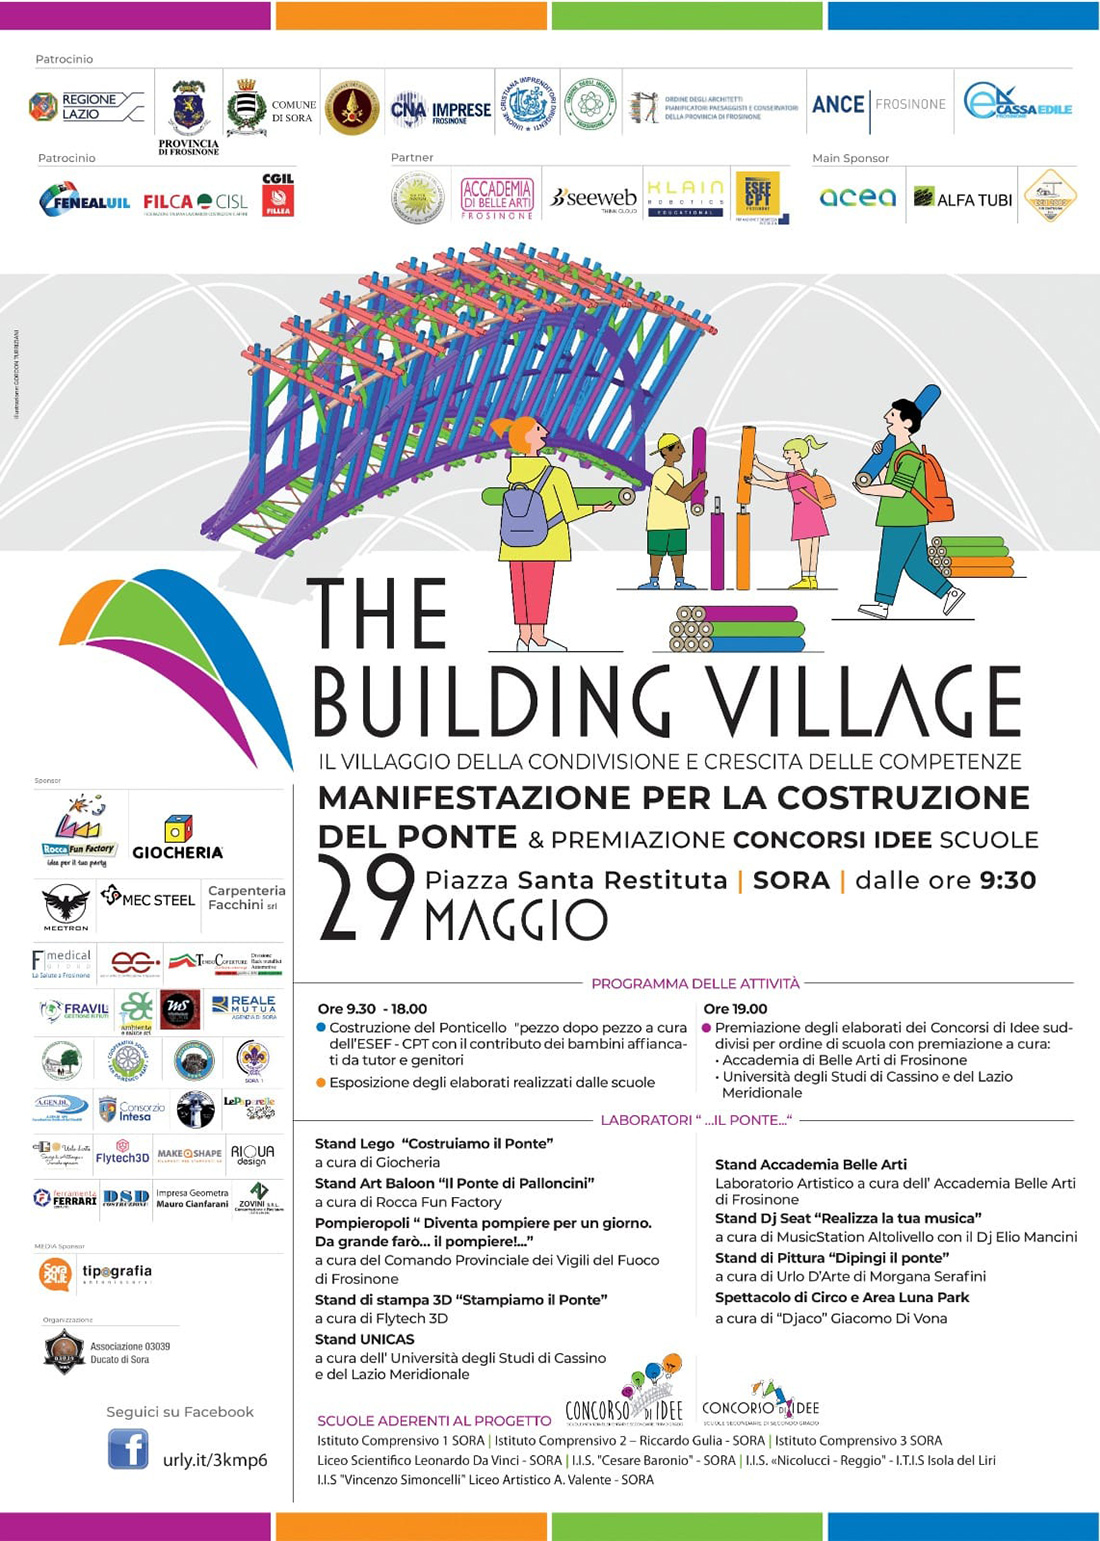 The Building Village